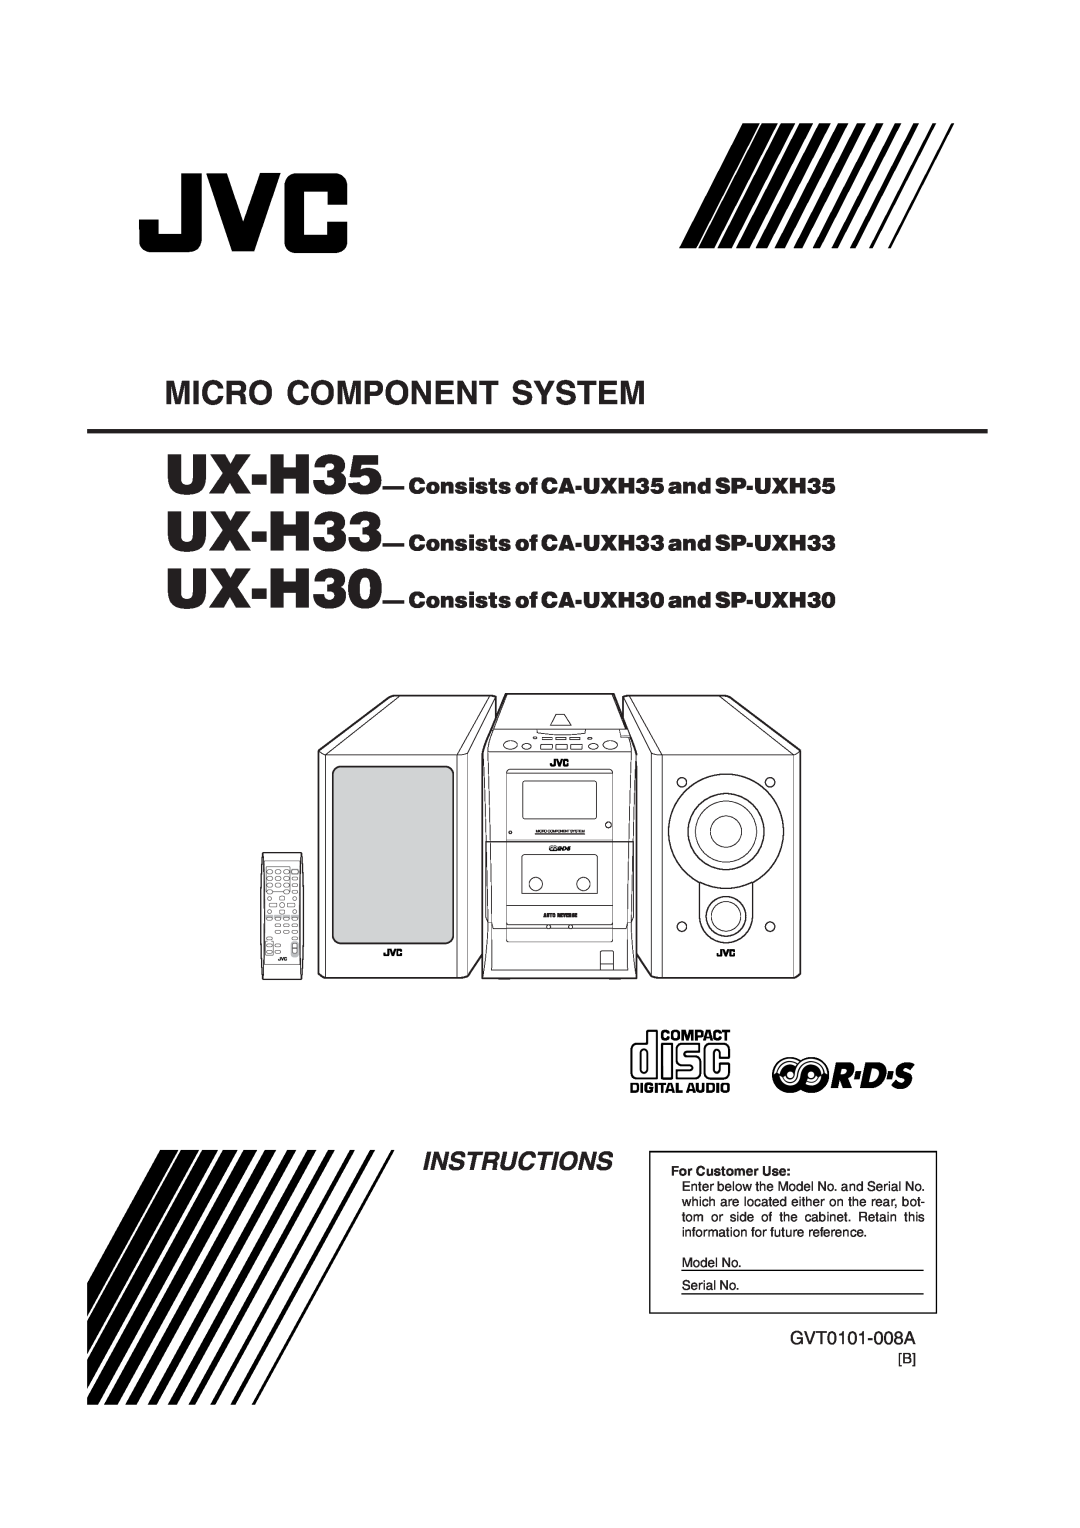 JVC UX-H30 manual Instructions, UX-H35-Consists of CA-UXH35and SP-UXH35, UX-H33-Consists of CA-UXH33and SP-UXH33 